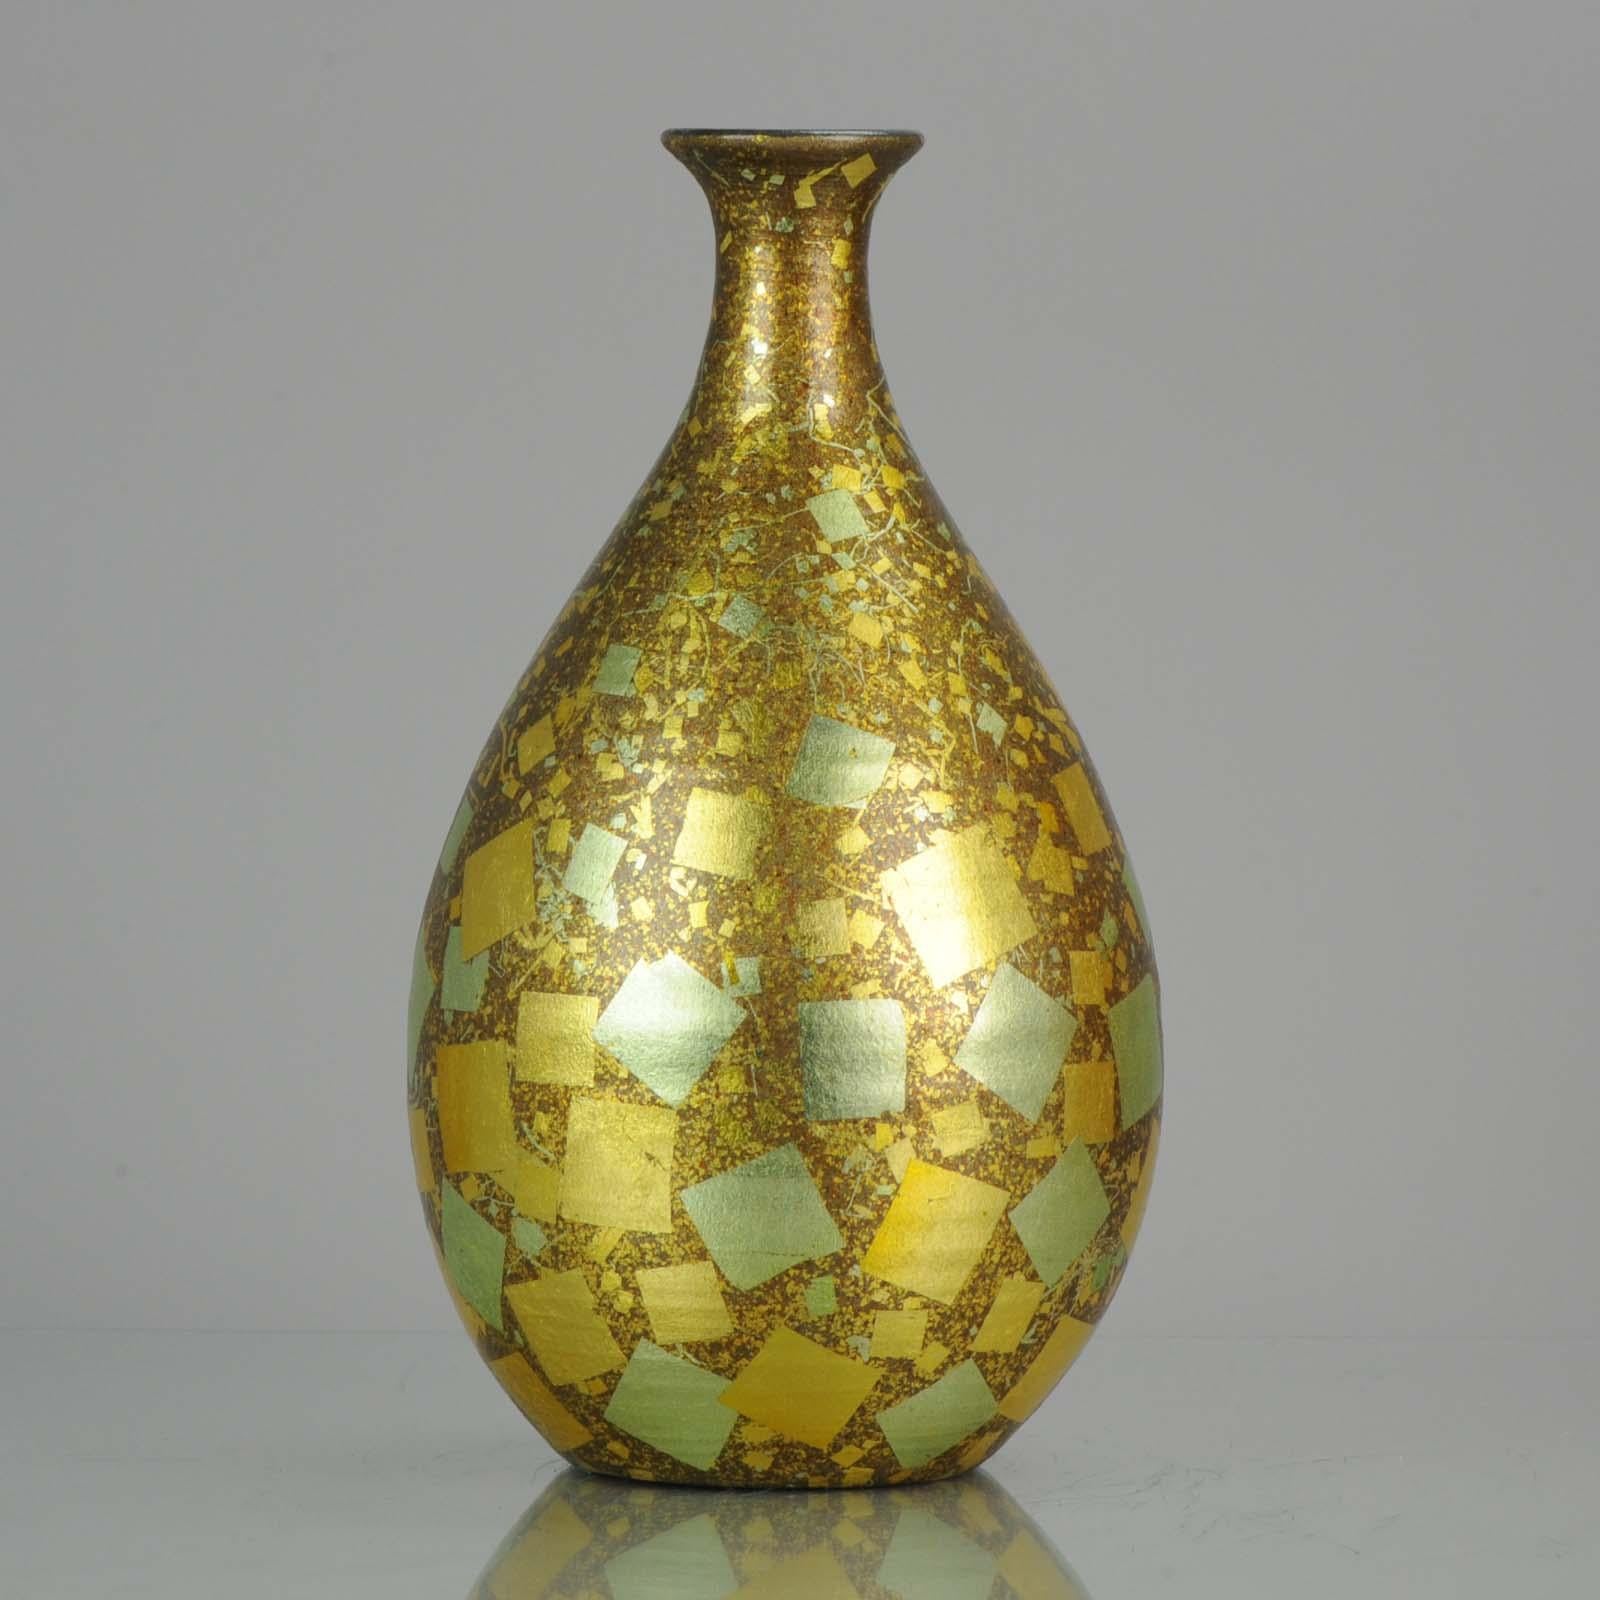 Hand-Painted Japanese Vase Early Showa Period Japan Ceramix Goldleafs, circa 1930-1950